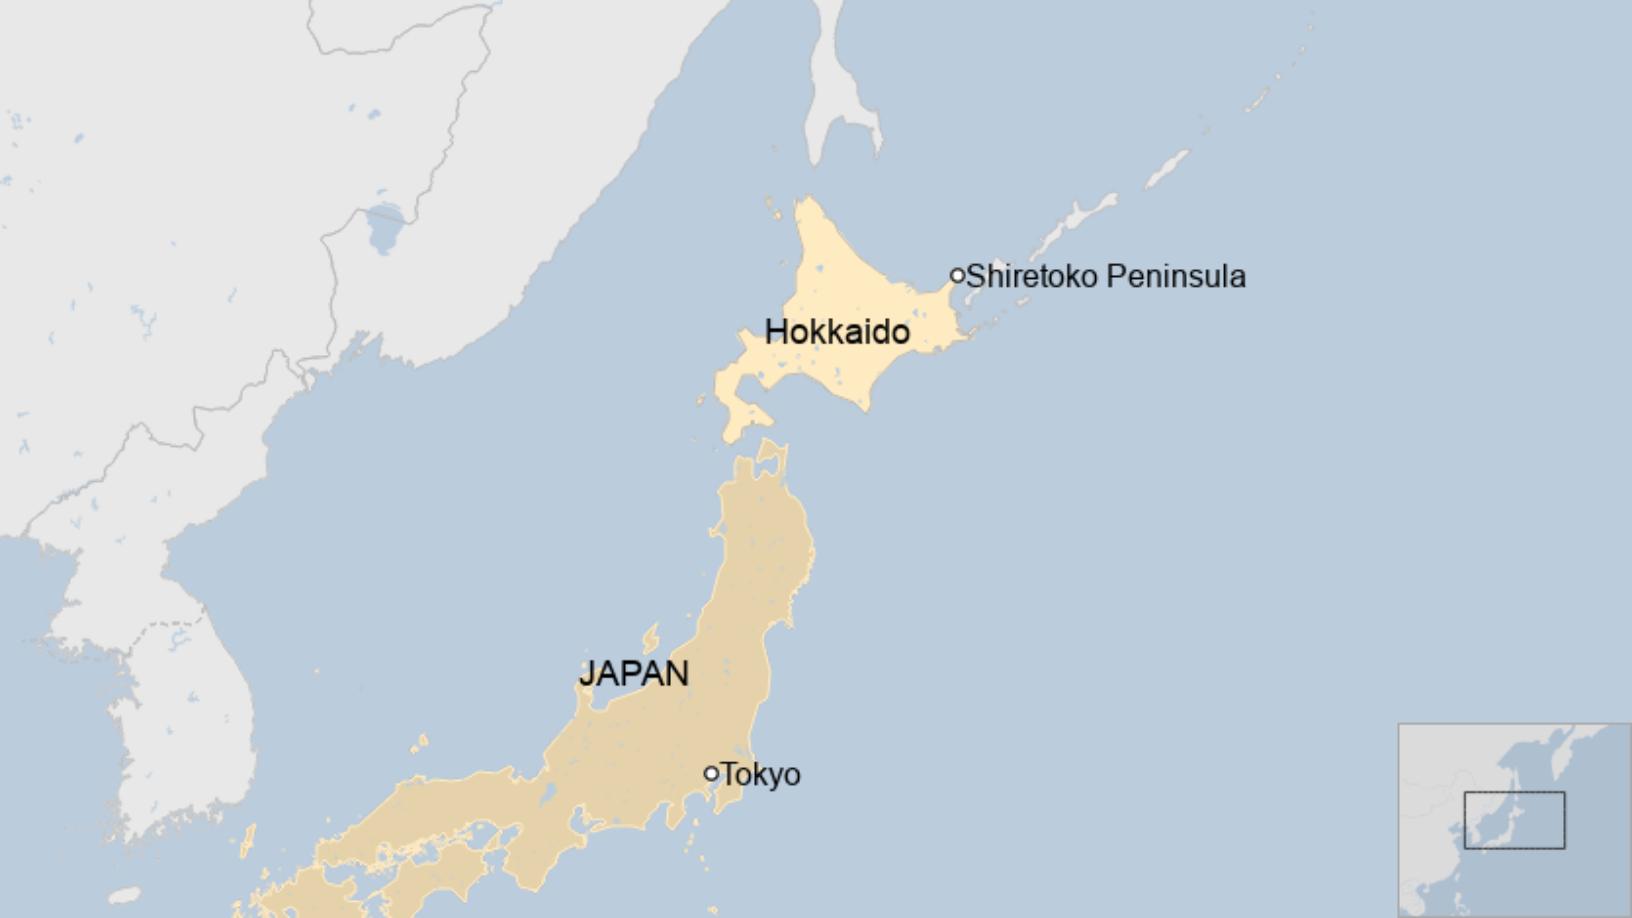 Map: Image shows Shiretoko peninsula